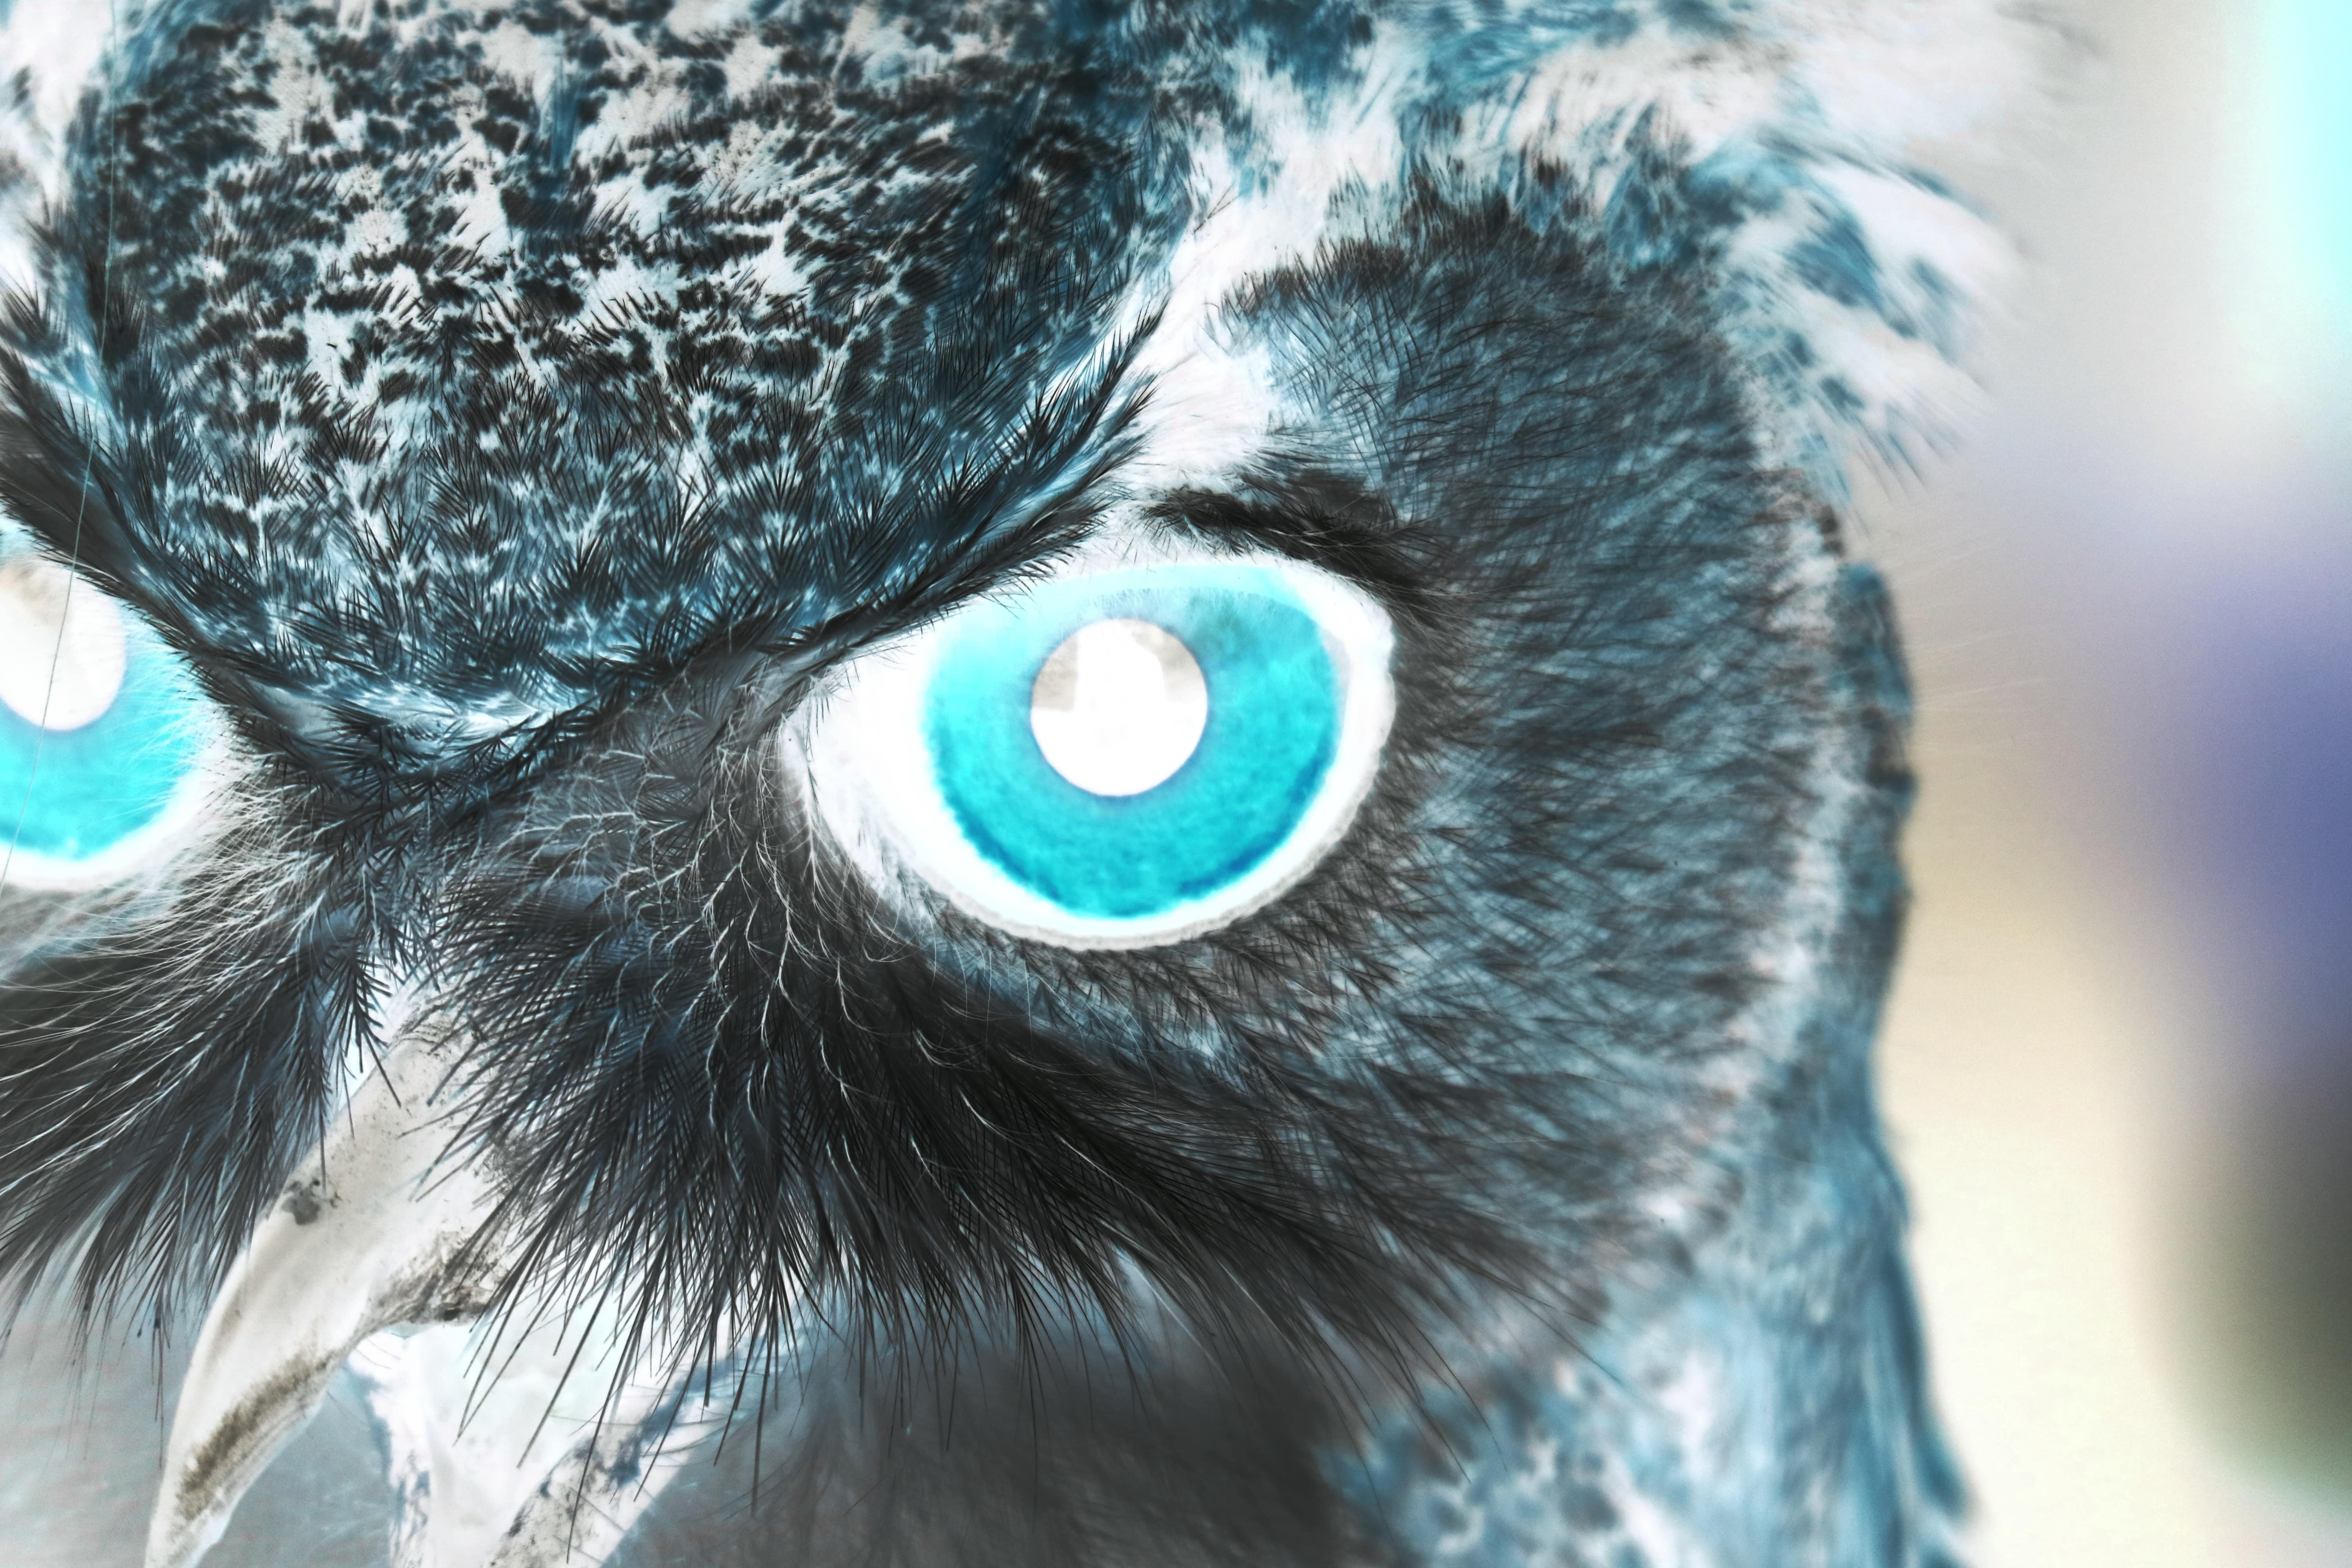 Red eyed owl image inverted